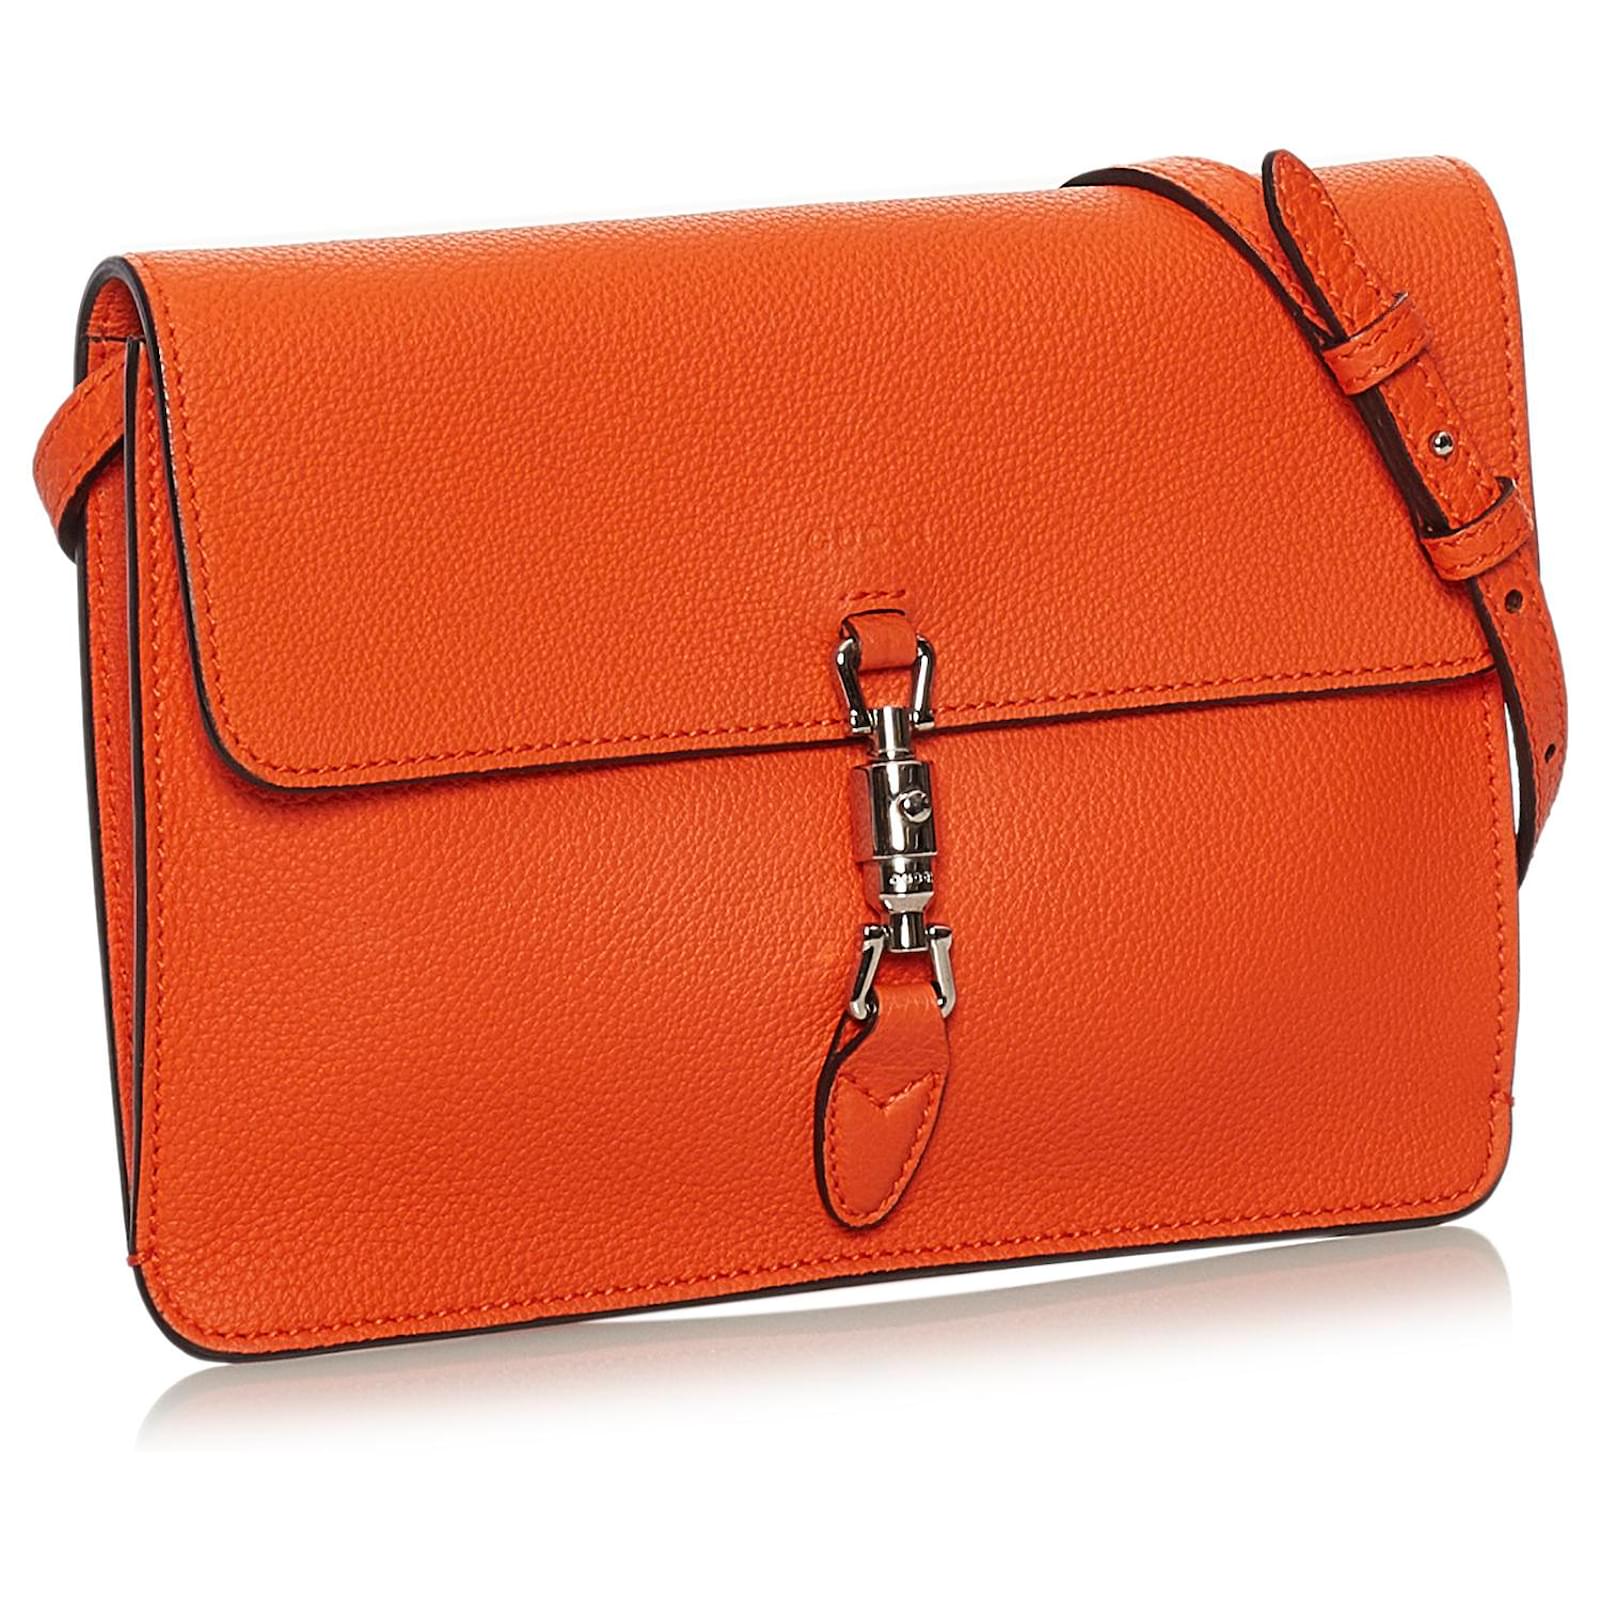 Gucci Orange Soft Jackie Convertible Leather Crossbody Bag Pony-style ...